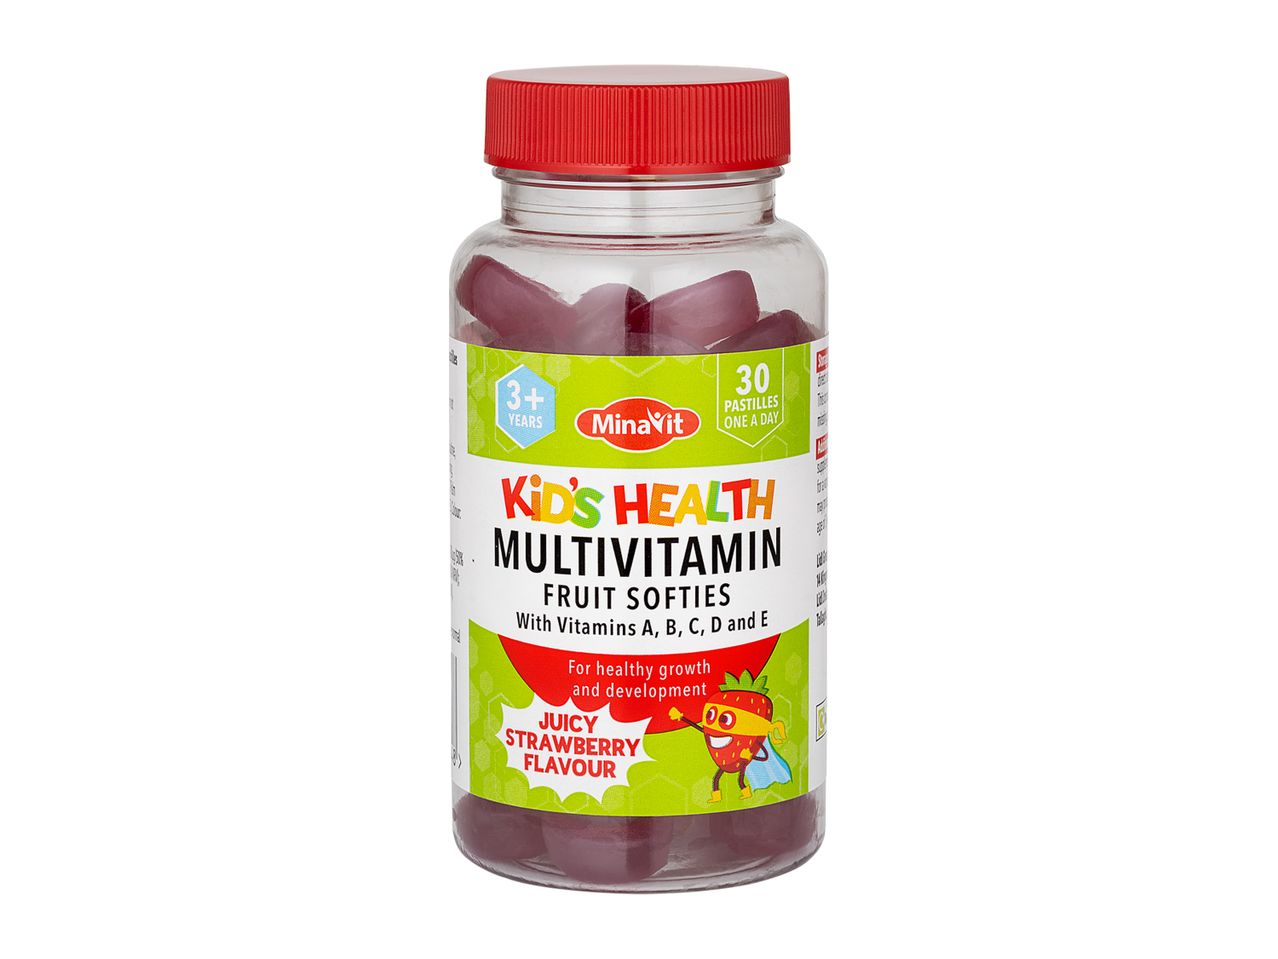 Go to full screen view: Minavit Kids' Multivitamin Fruit Softies - Image 3